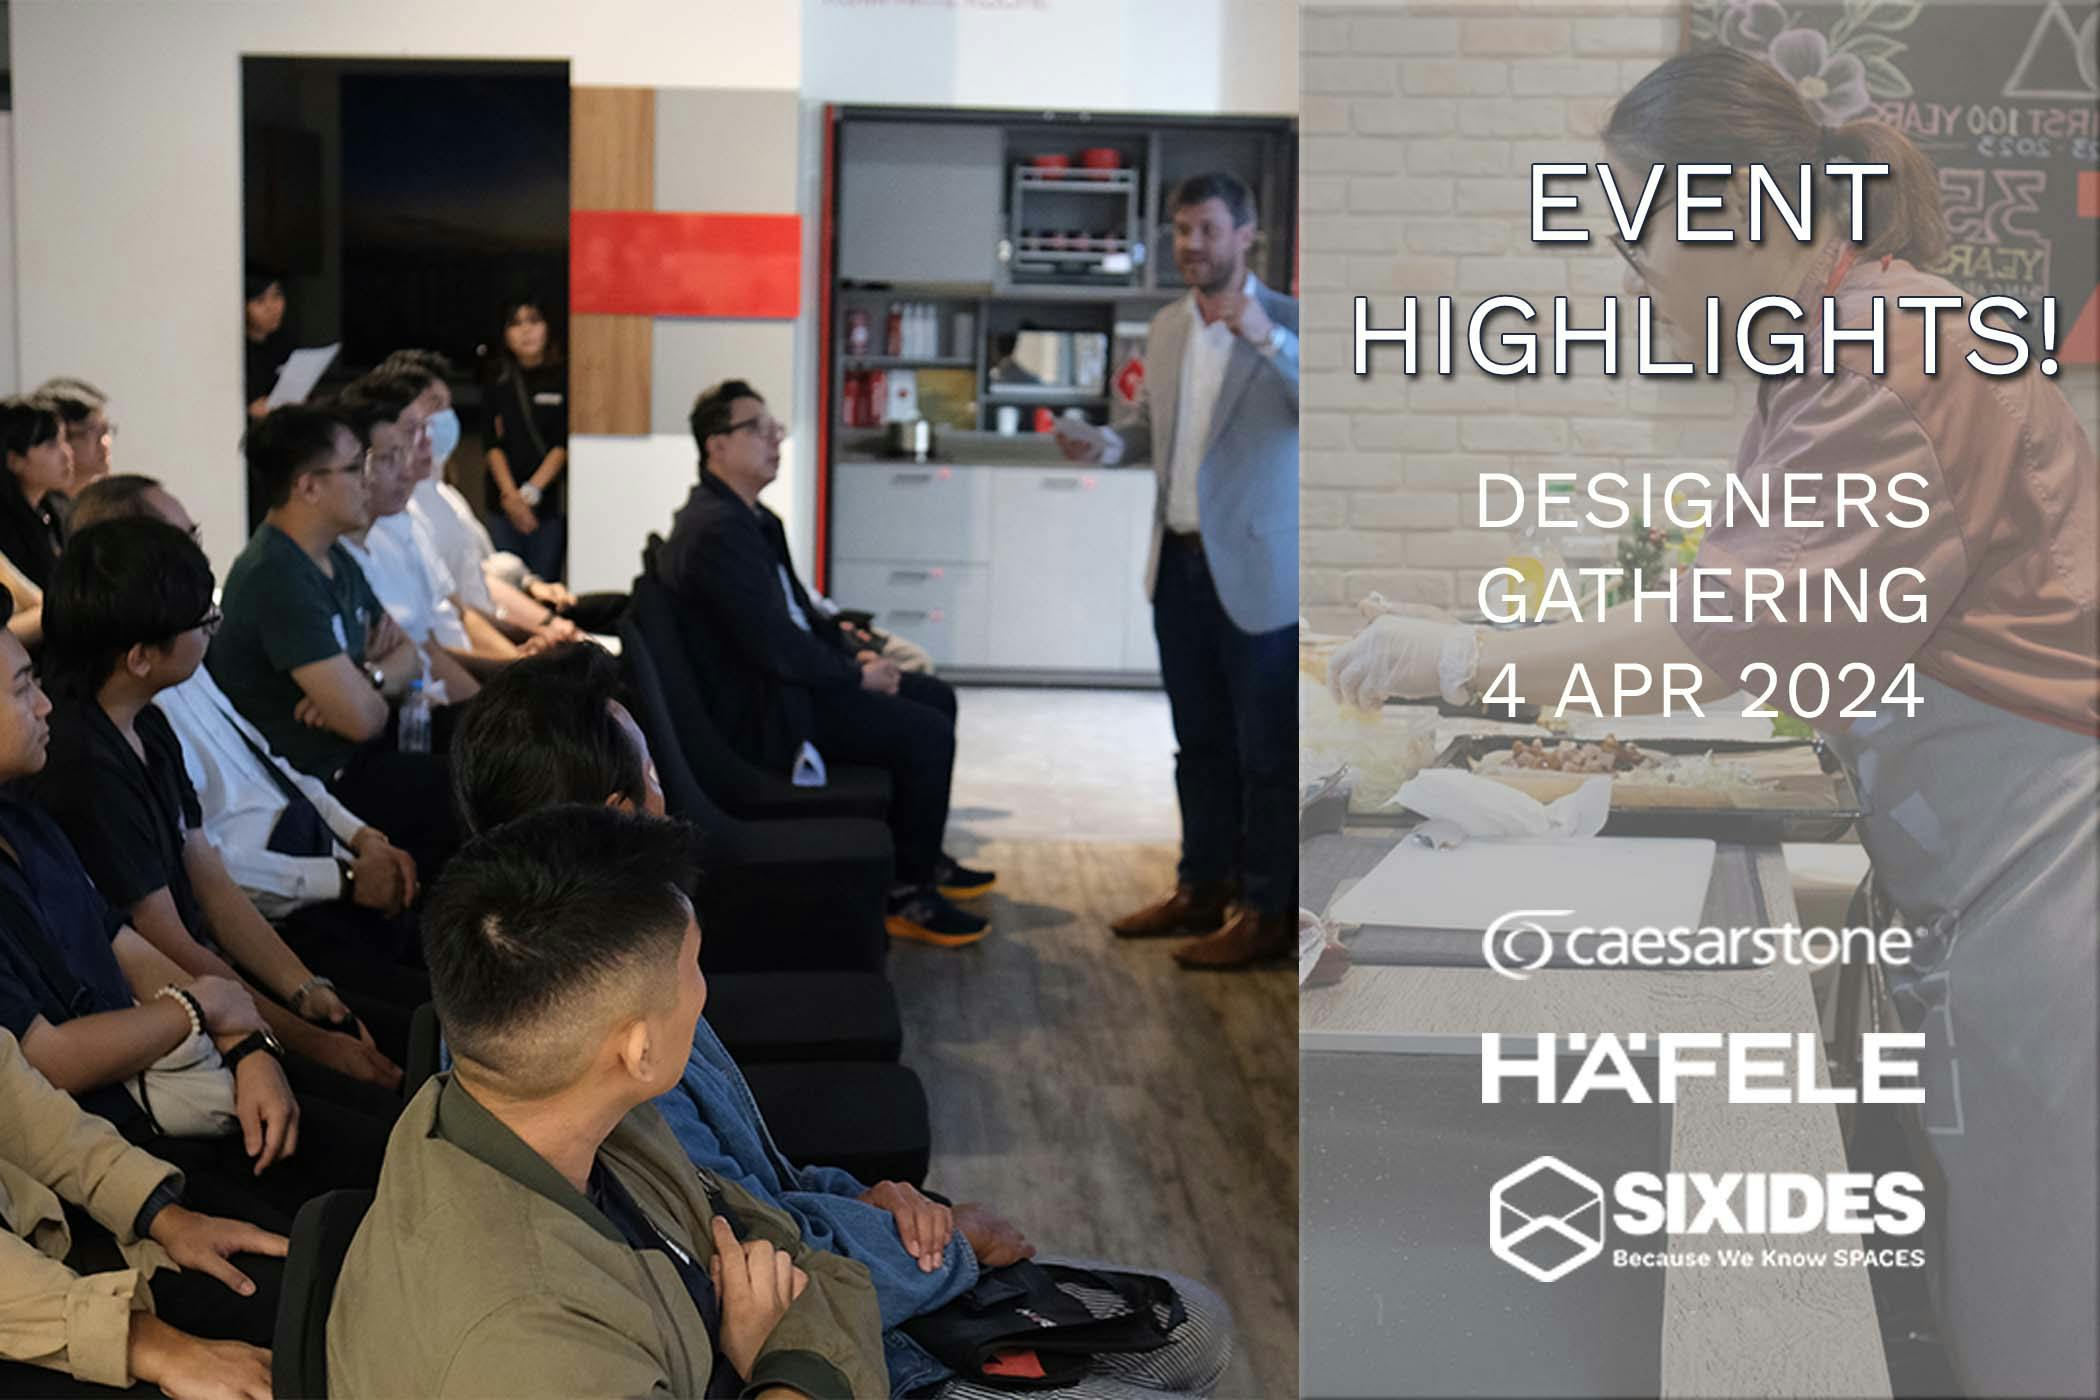 HAFELE x SIXiDES Designers Gathering (6) Apr '24